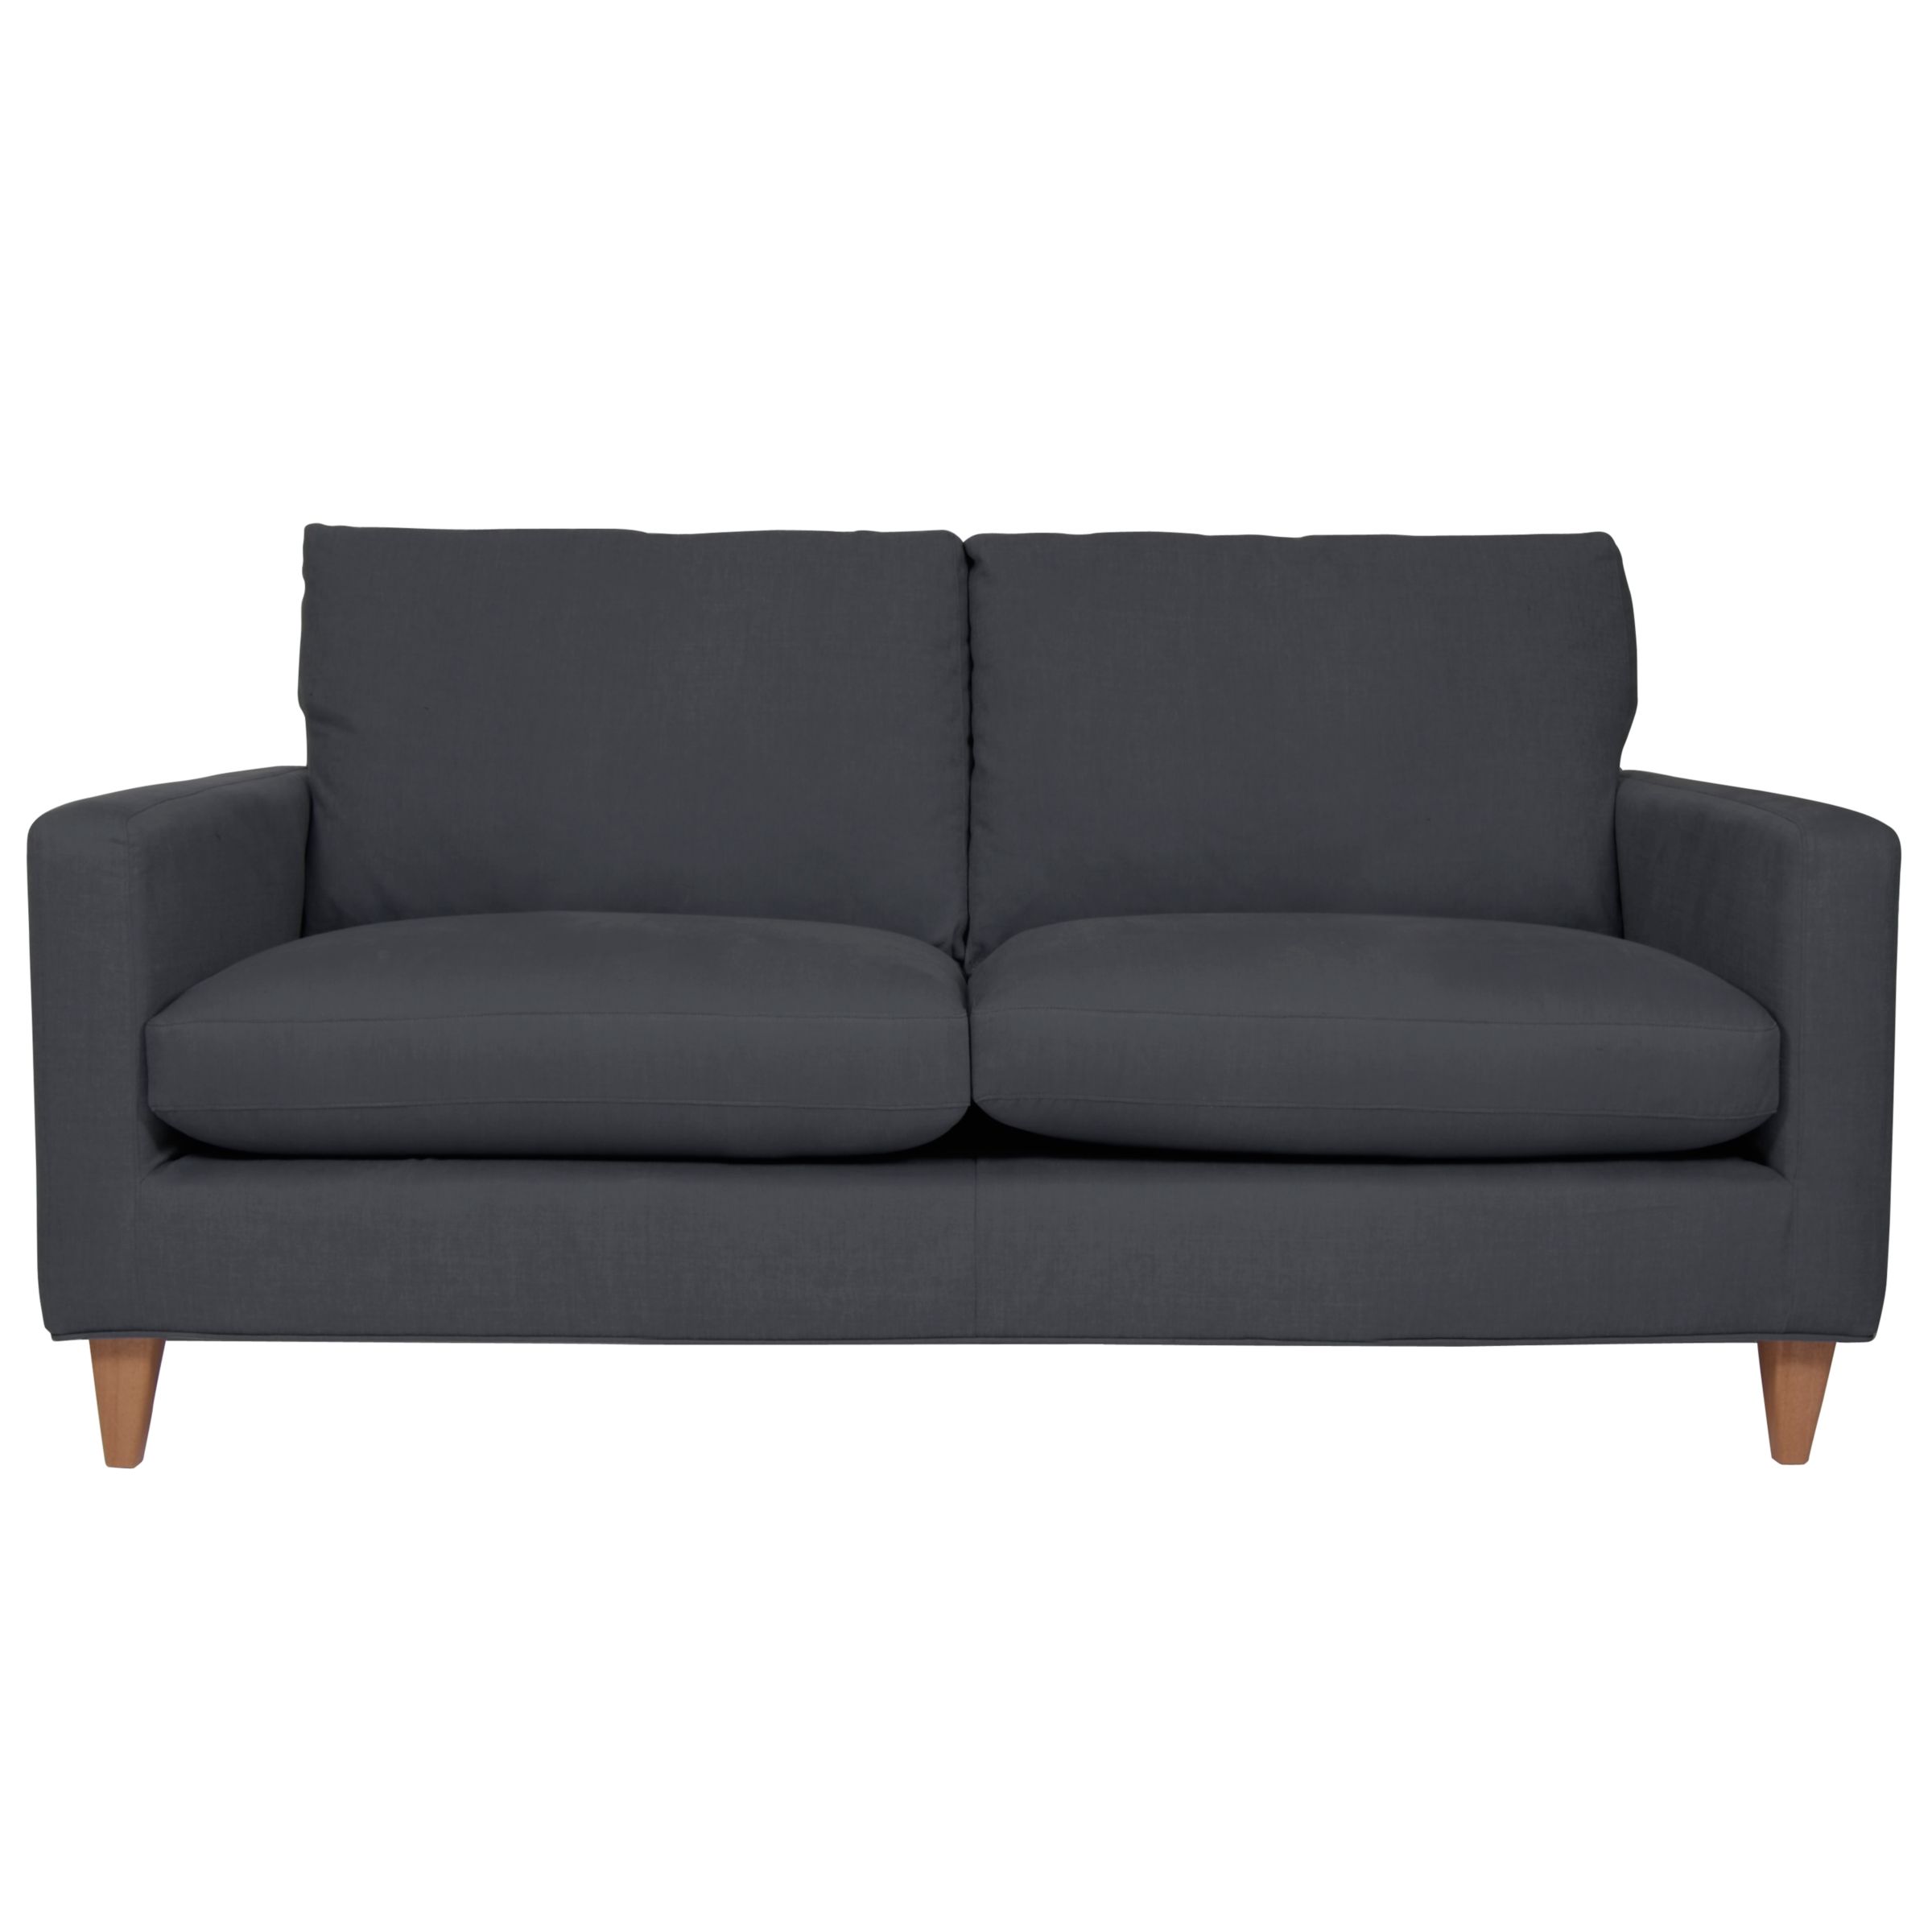 John Lewis Bailey Medium Sofa, Steel, width 175cm